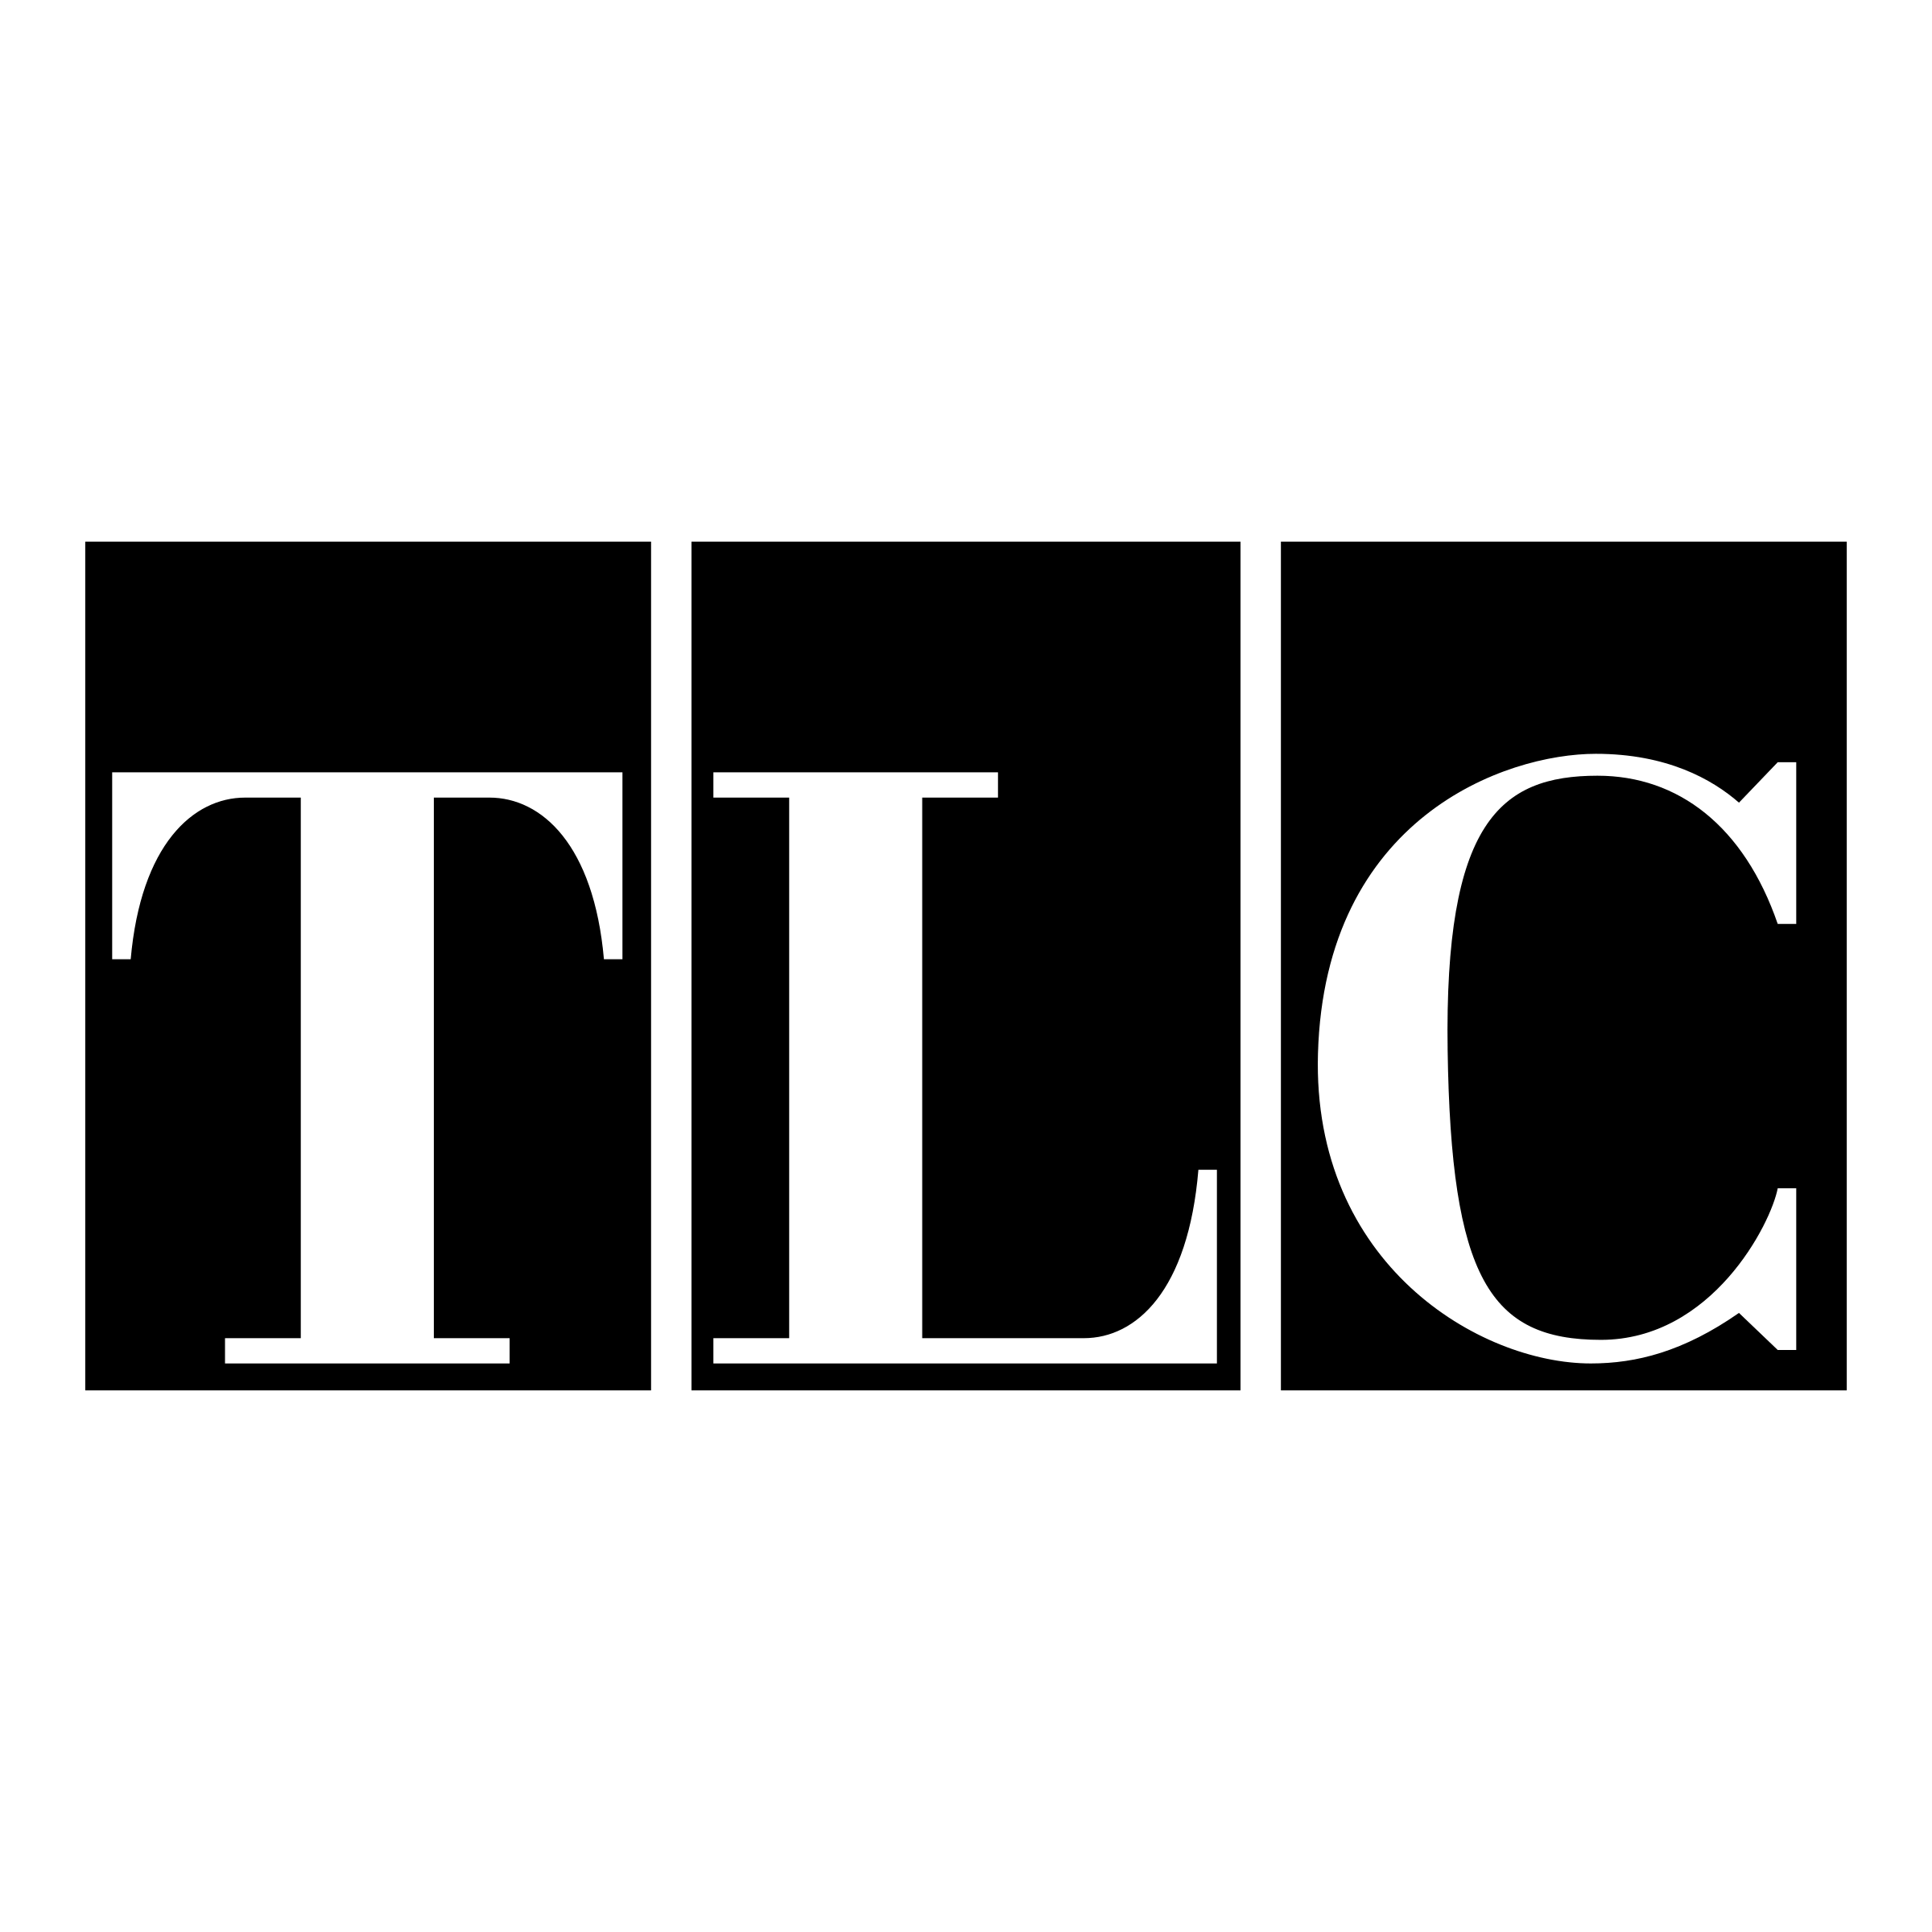 TLC Logo - TLC Logo PNG Transparent & SVG Vector - Freebie Supply